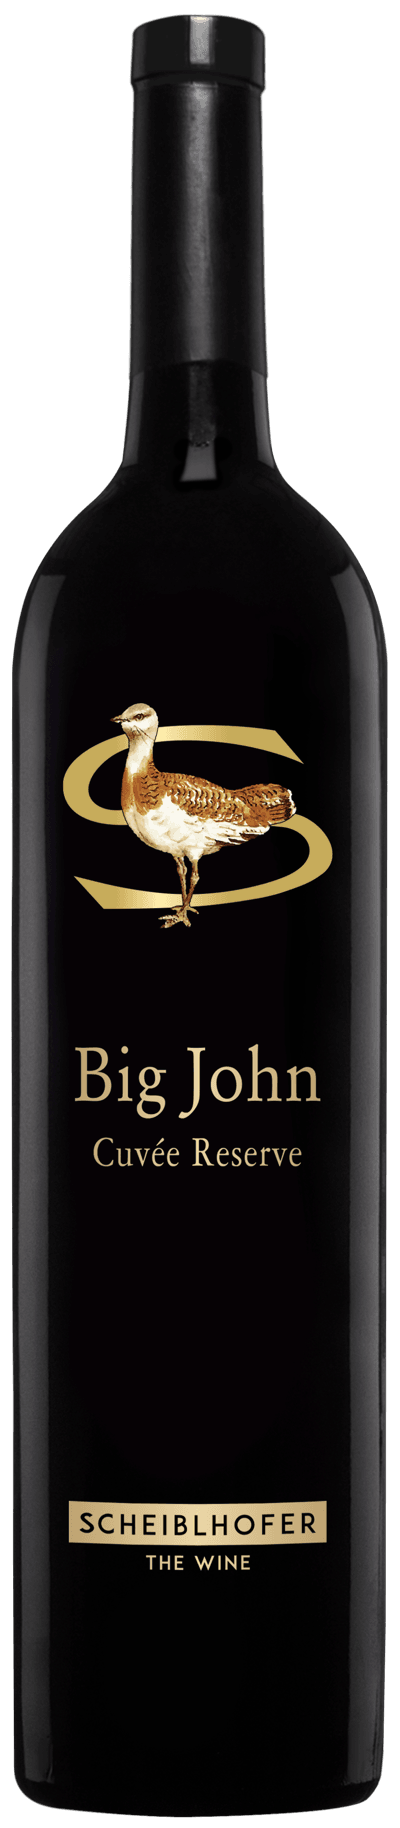 Big John, Scheiblhofer 2020 (1,50l)